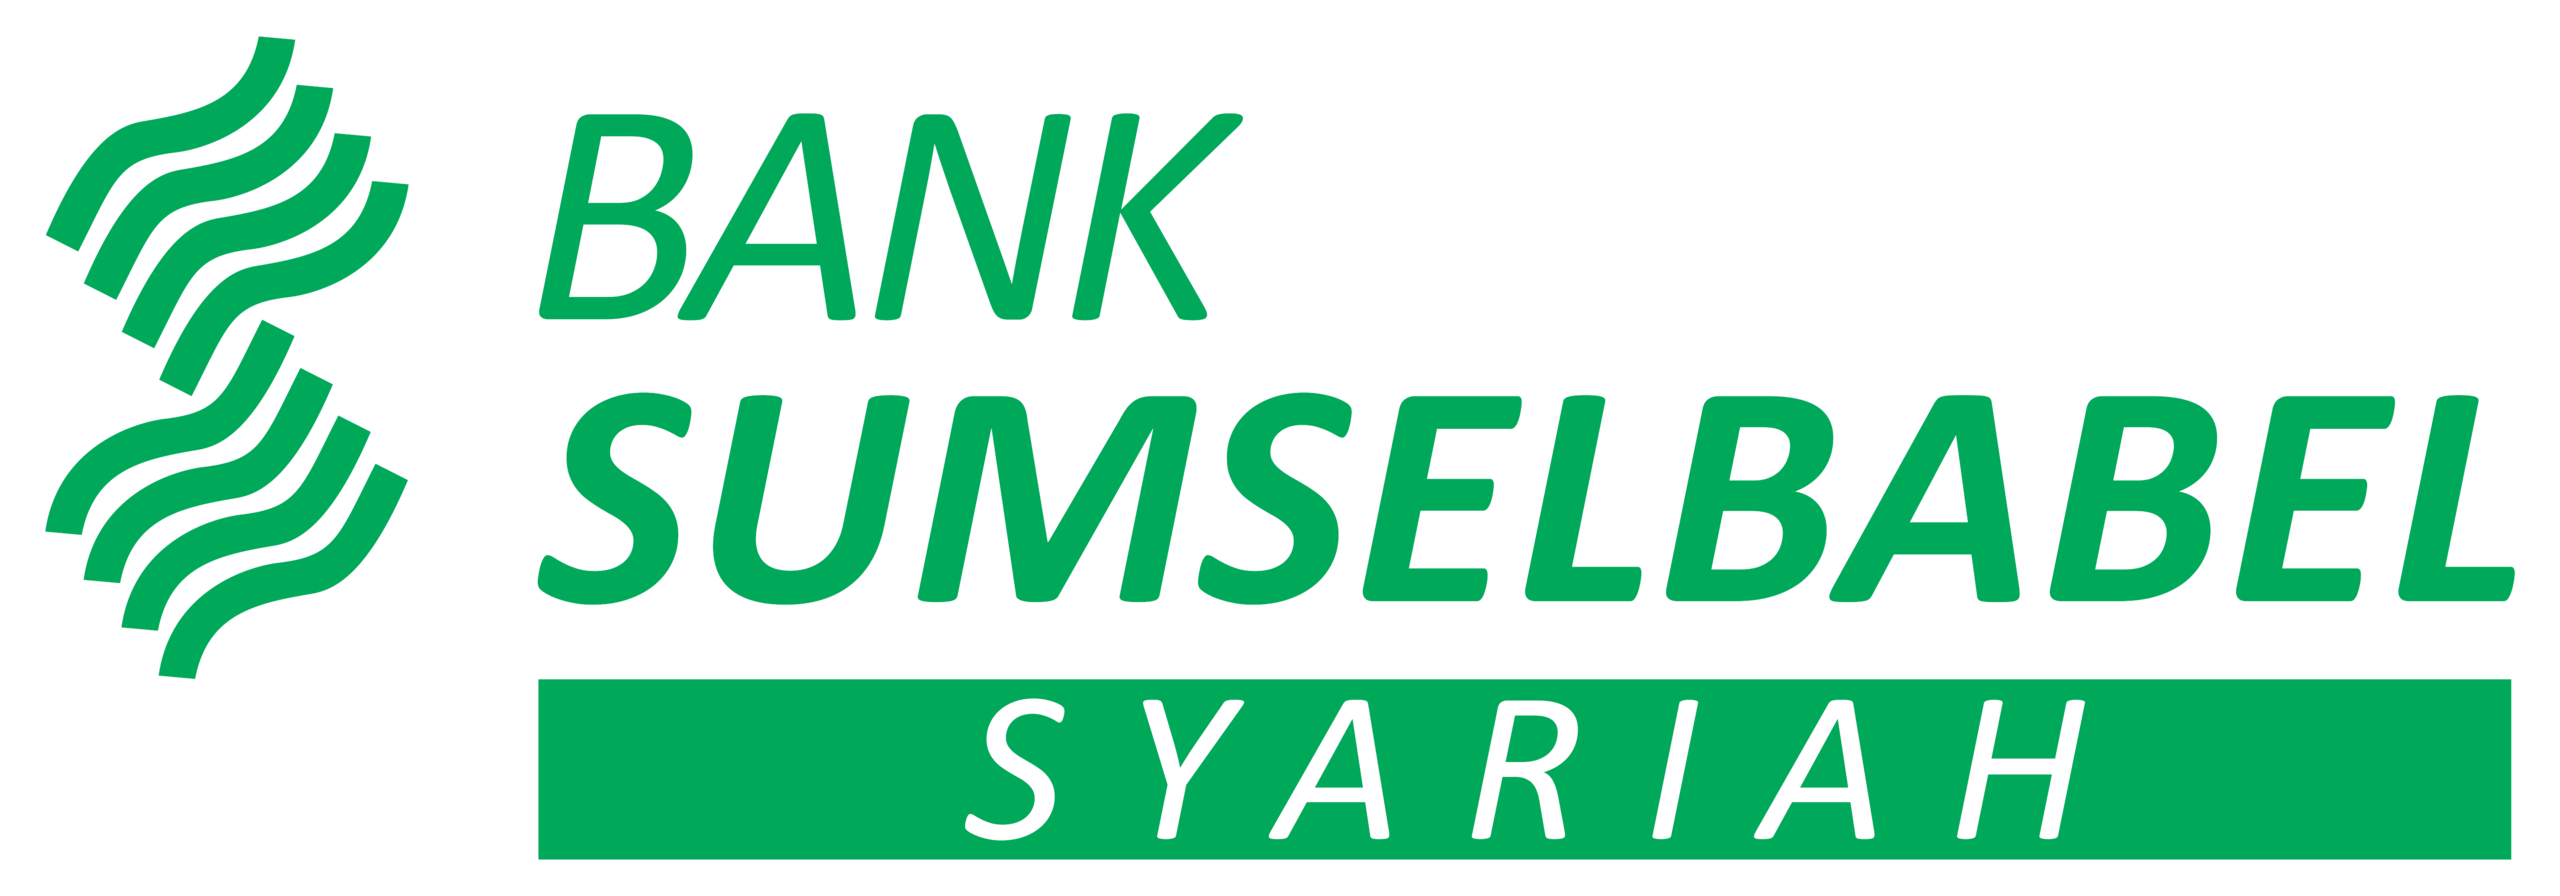 BANK_SUMSEL_BABEL_SYARIAH